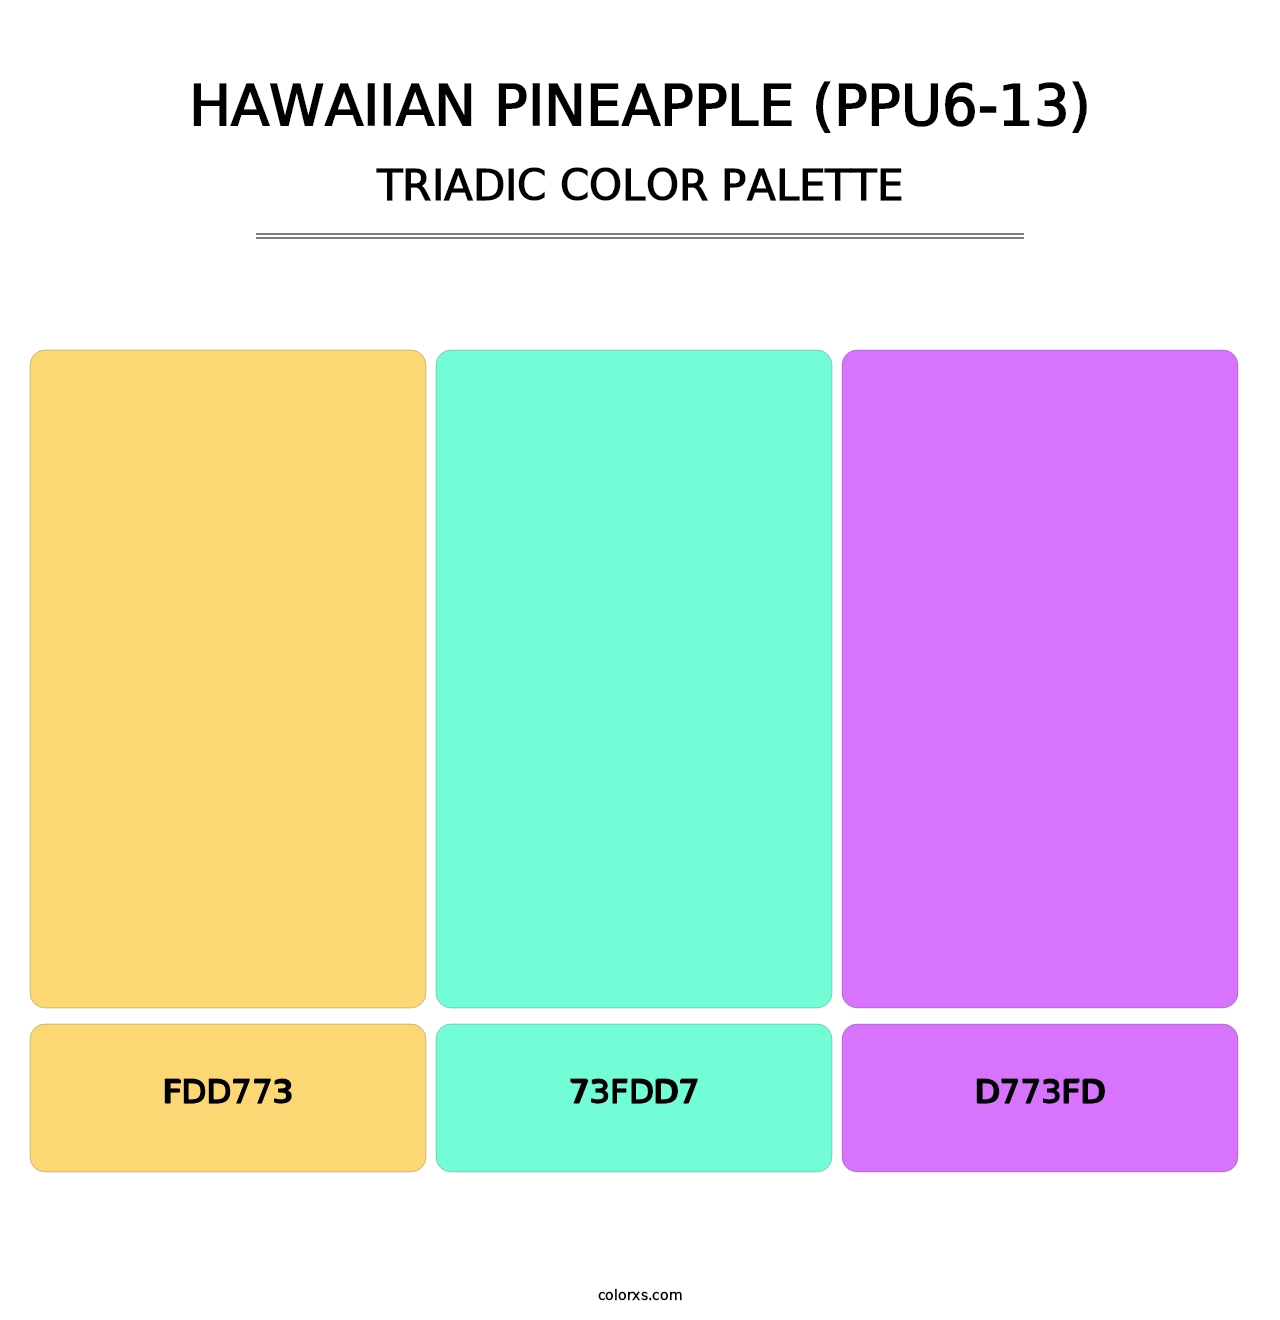 Hawaiian Pineapple (PPU6-13) - Triadic Color Palette